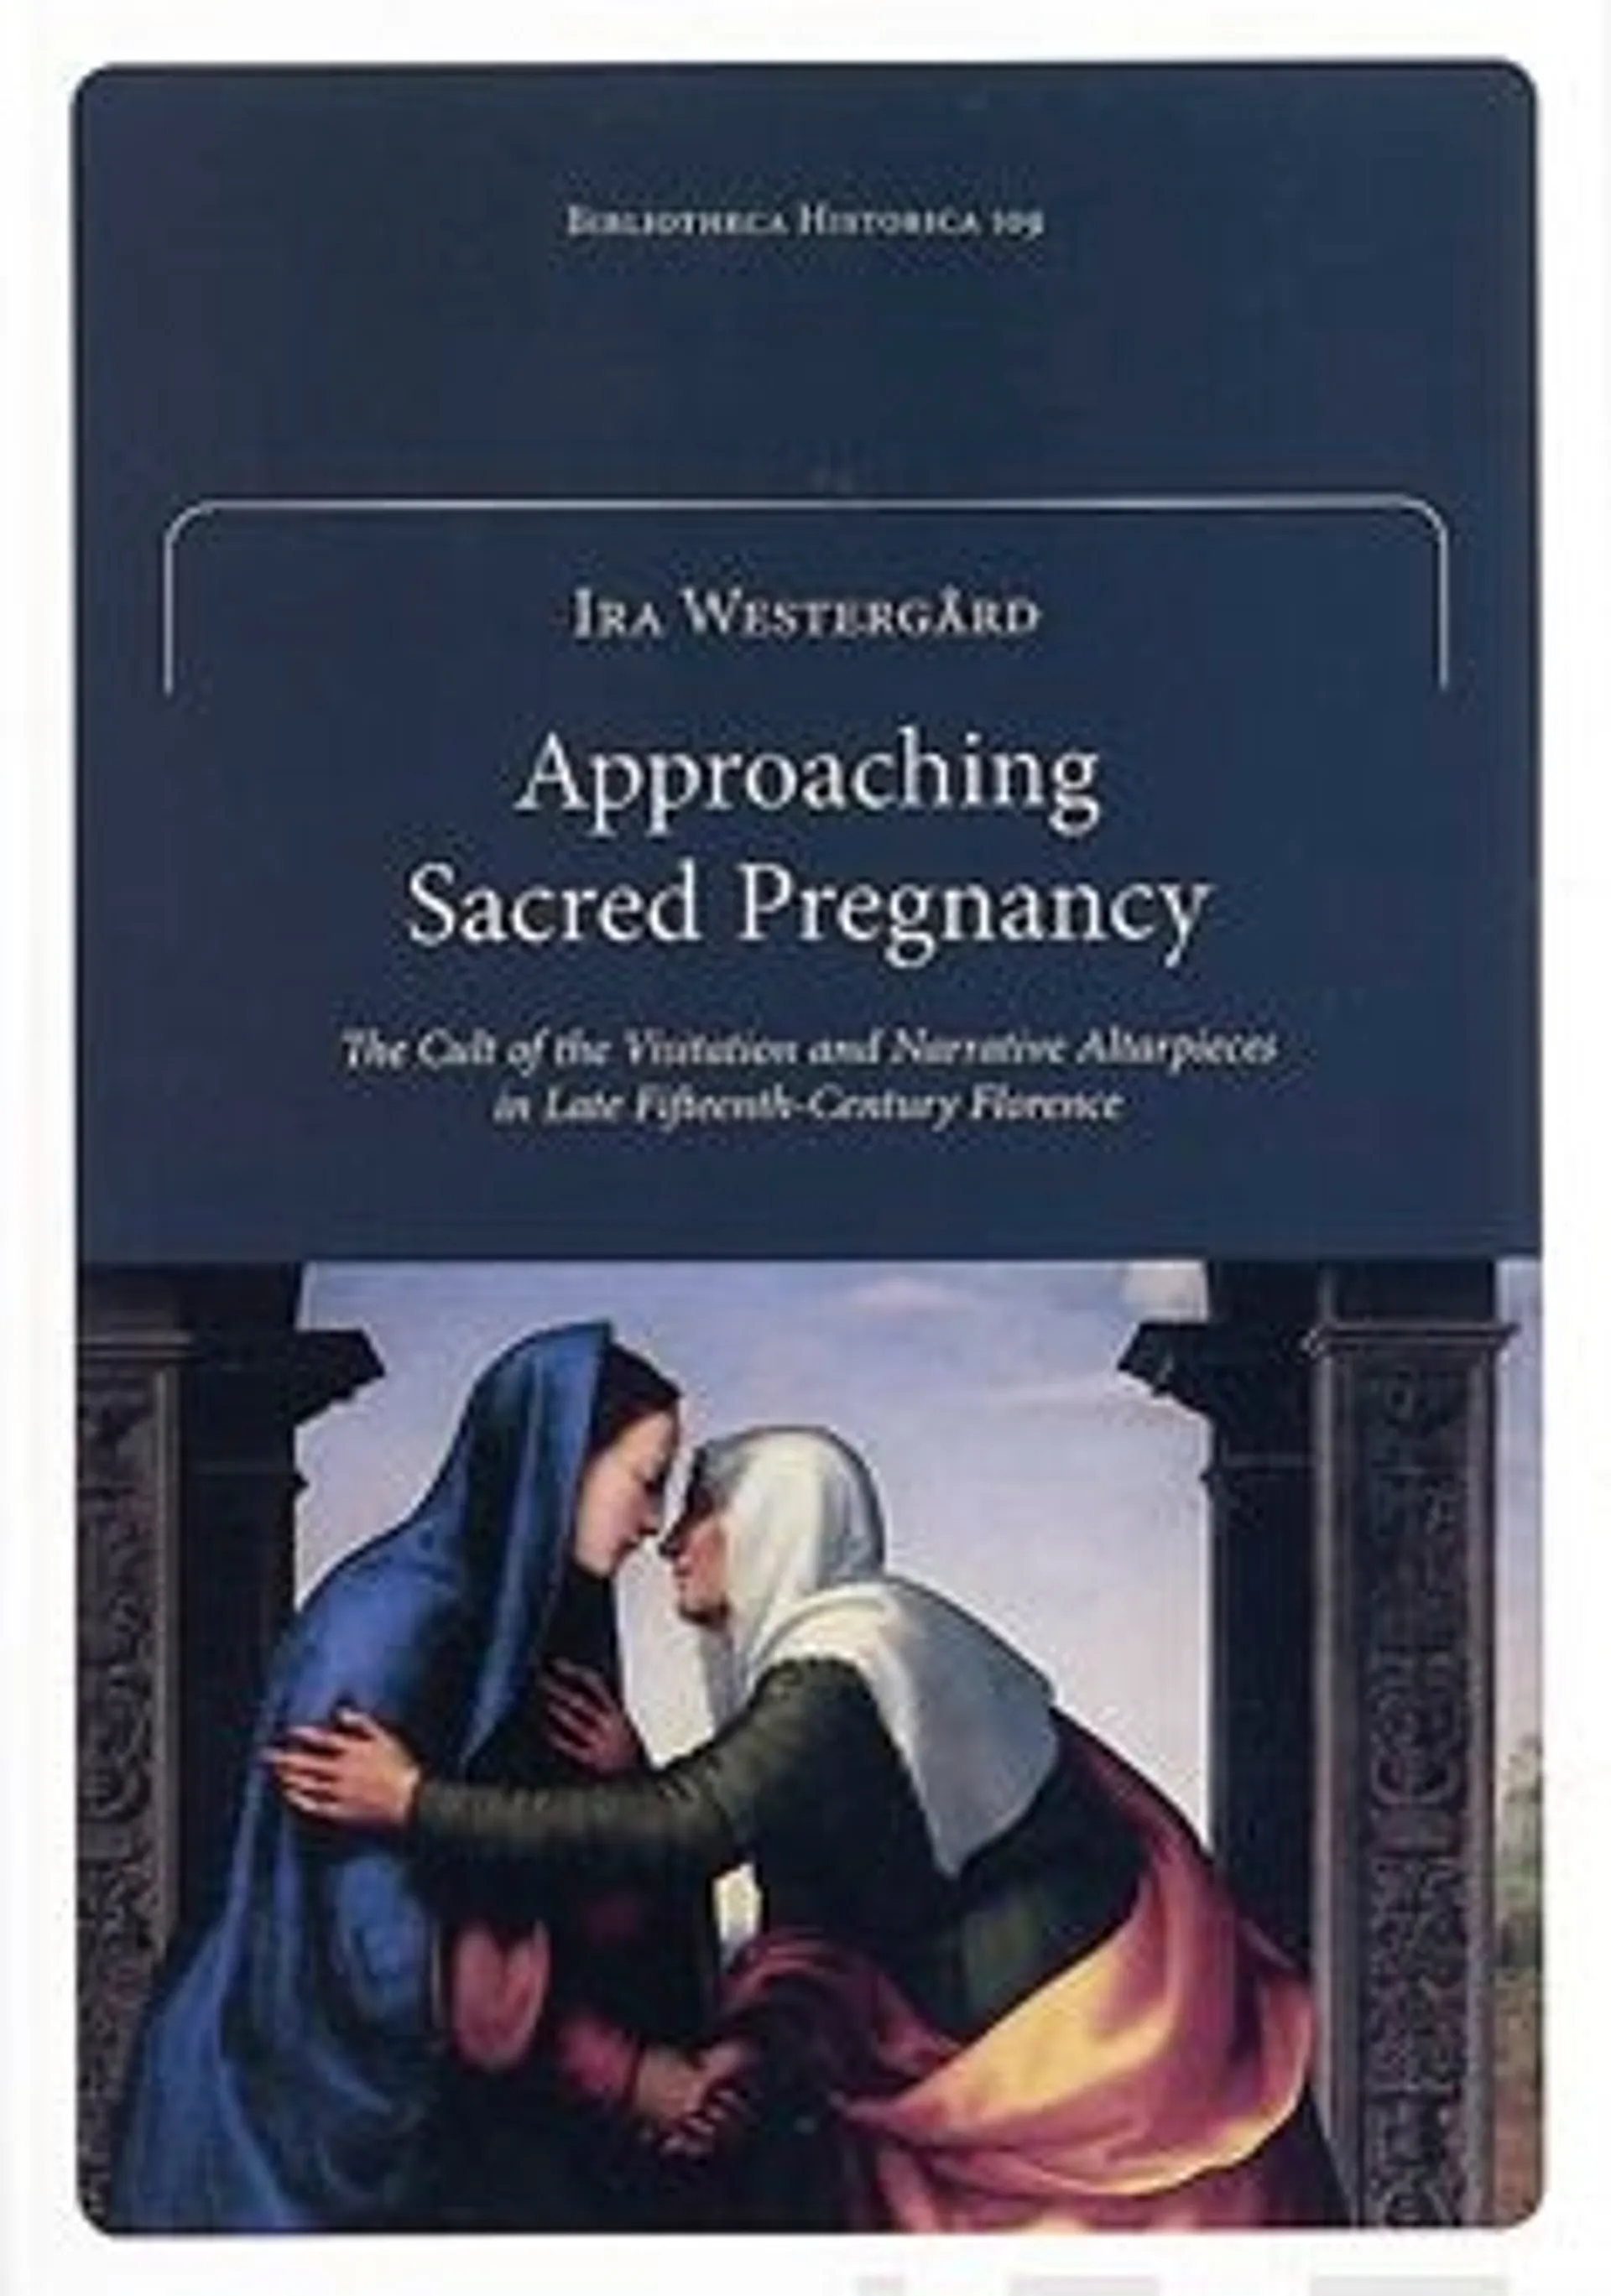 Westergård, Approaching sacred pregnancy